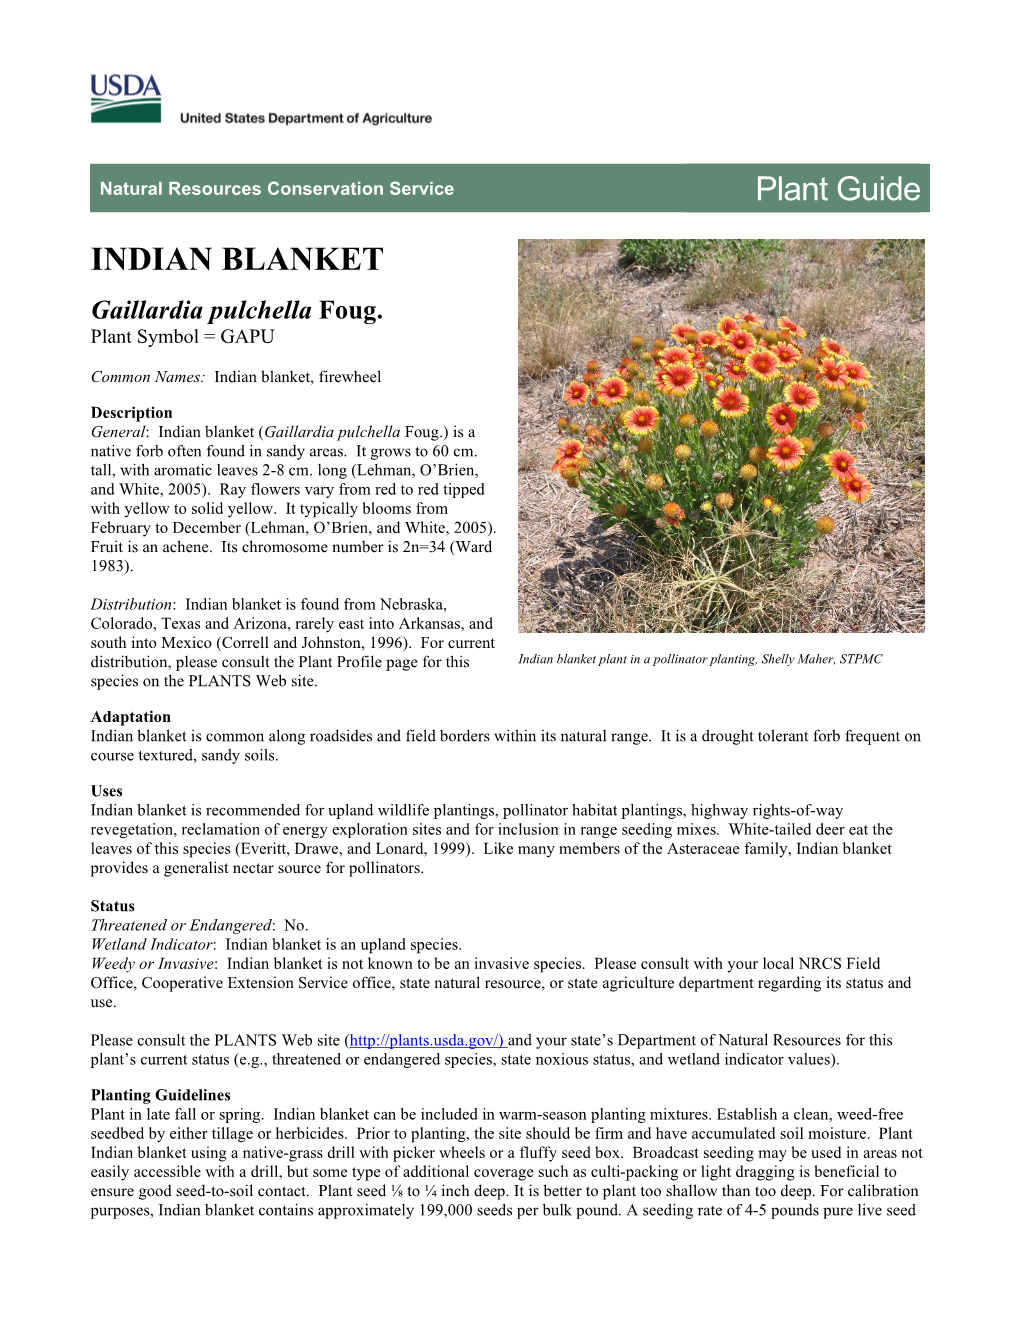 Plant Guide for Indian Blanket (Gaillardia Pulchella)